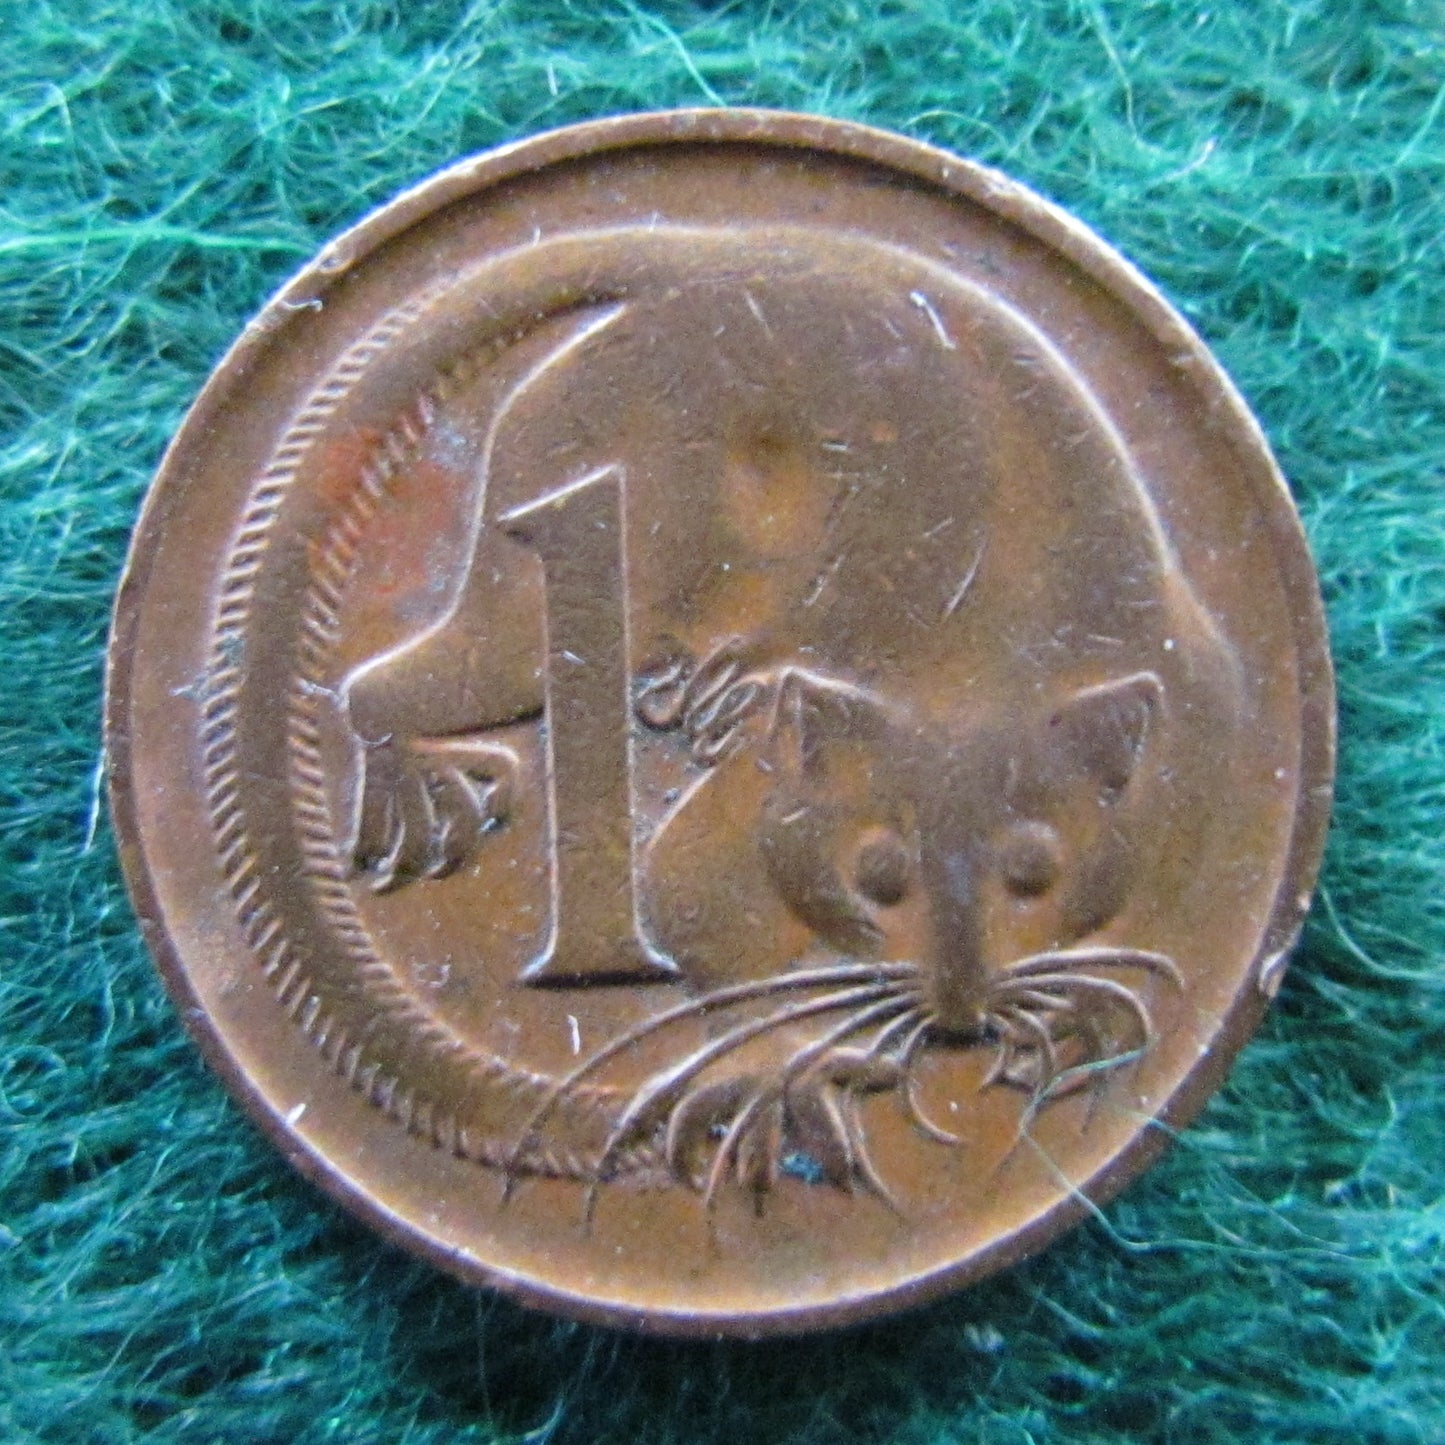 Australian 1970 1 Cent Queen Elizabeth Coin